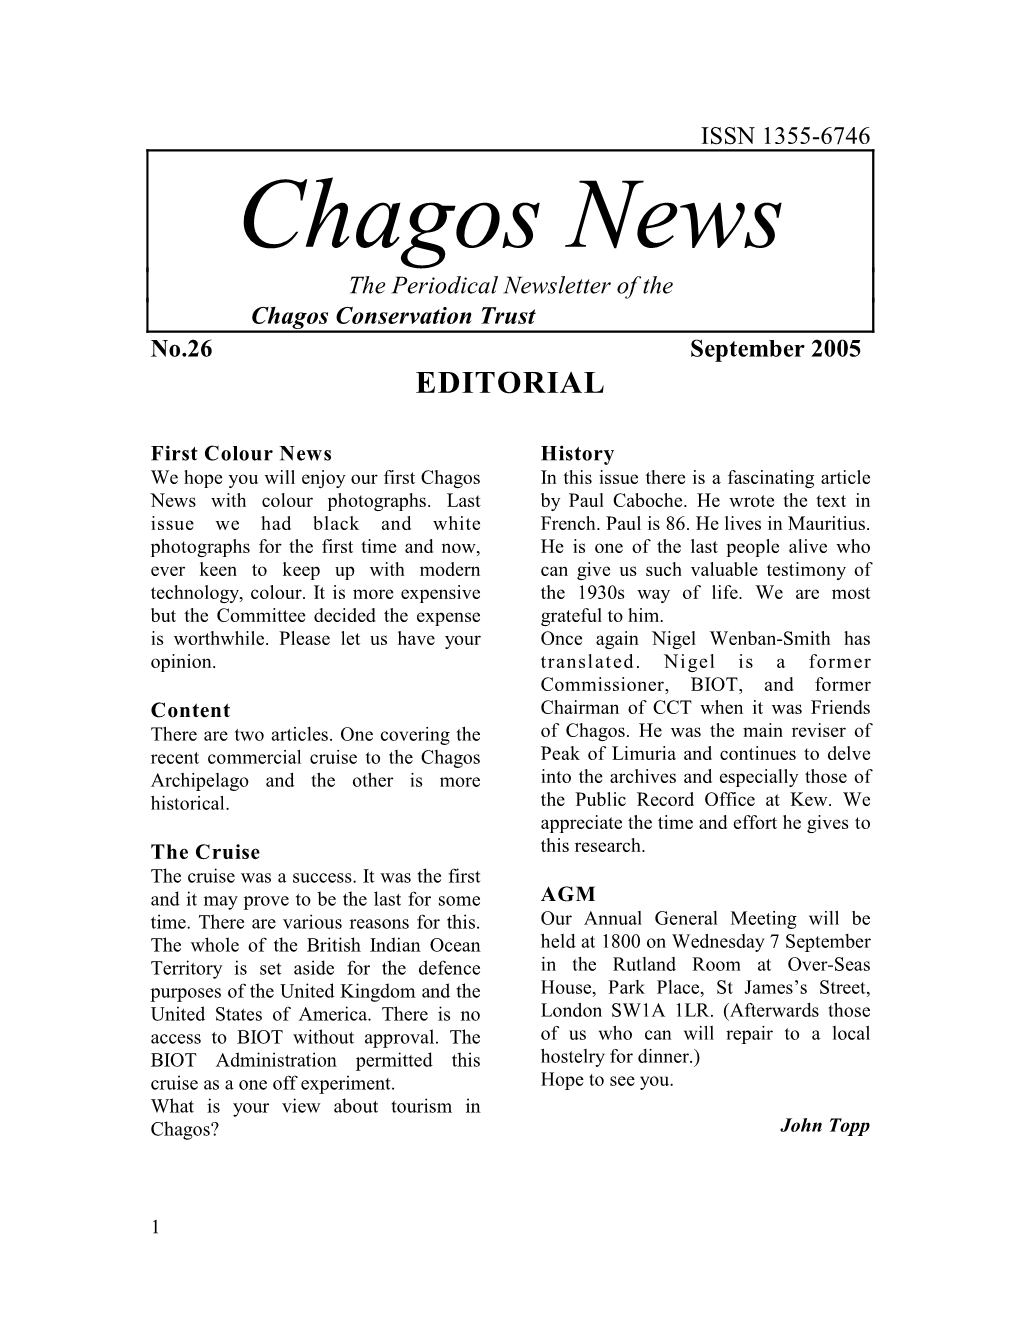 Chagos News Issue